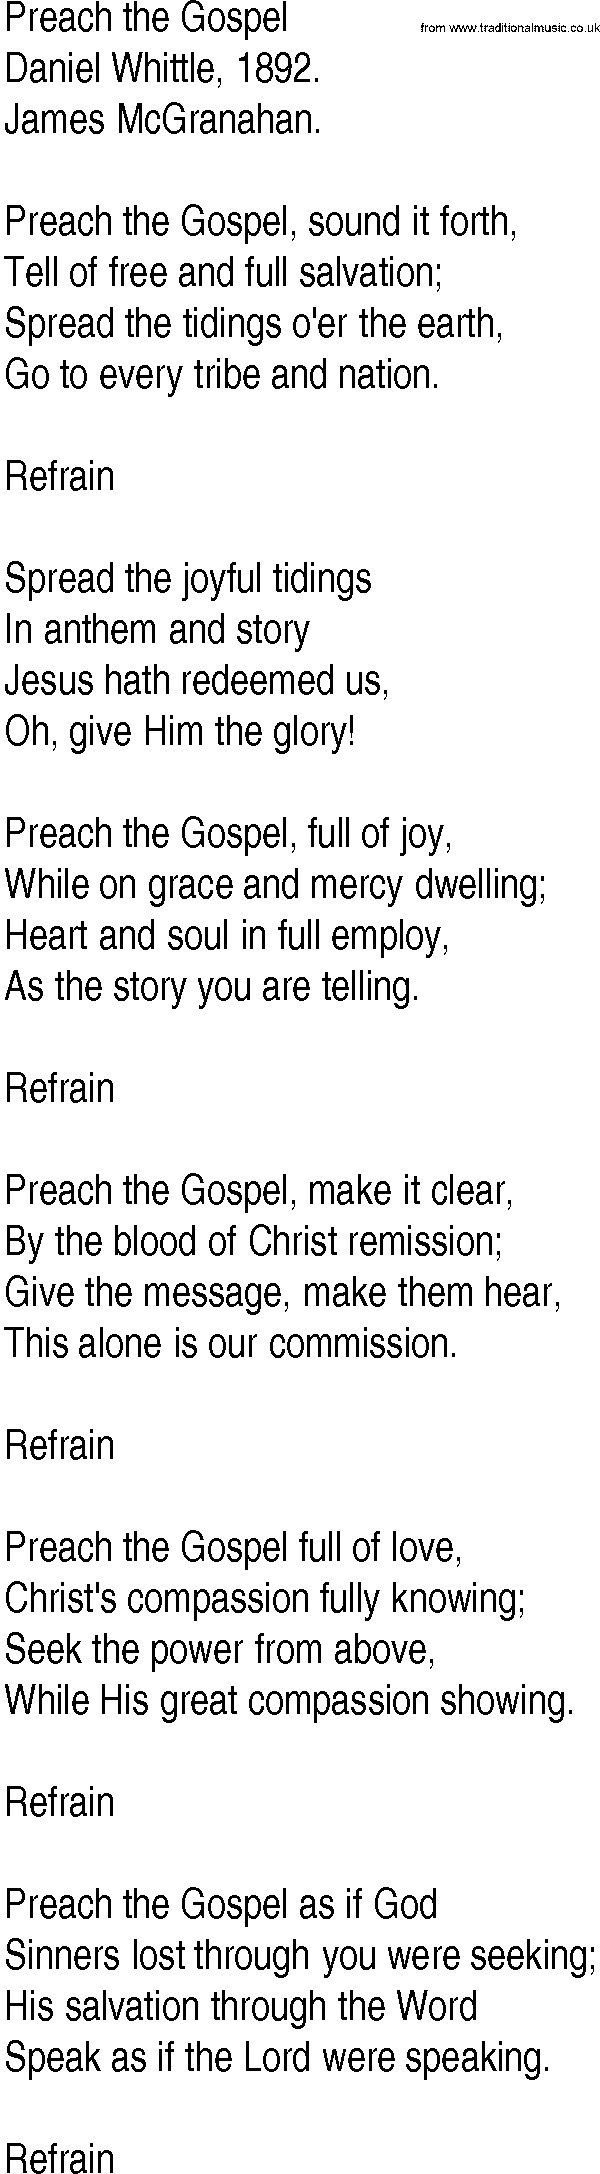 Hymn and Gospel Song: Preach the Gospel by Daniel Whittle lyrics